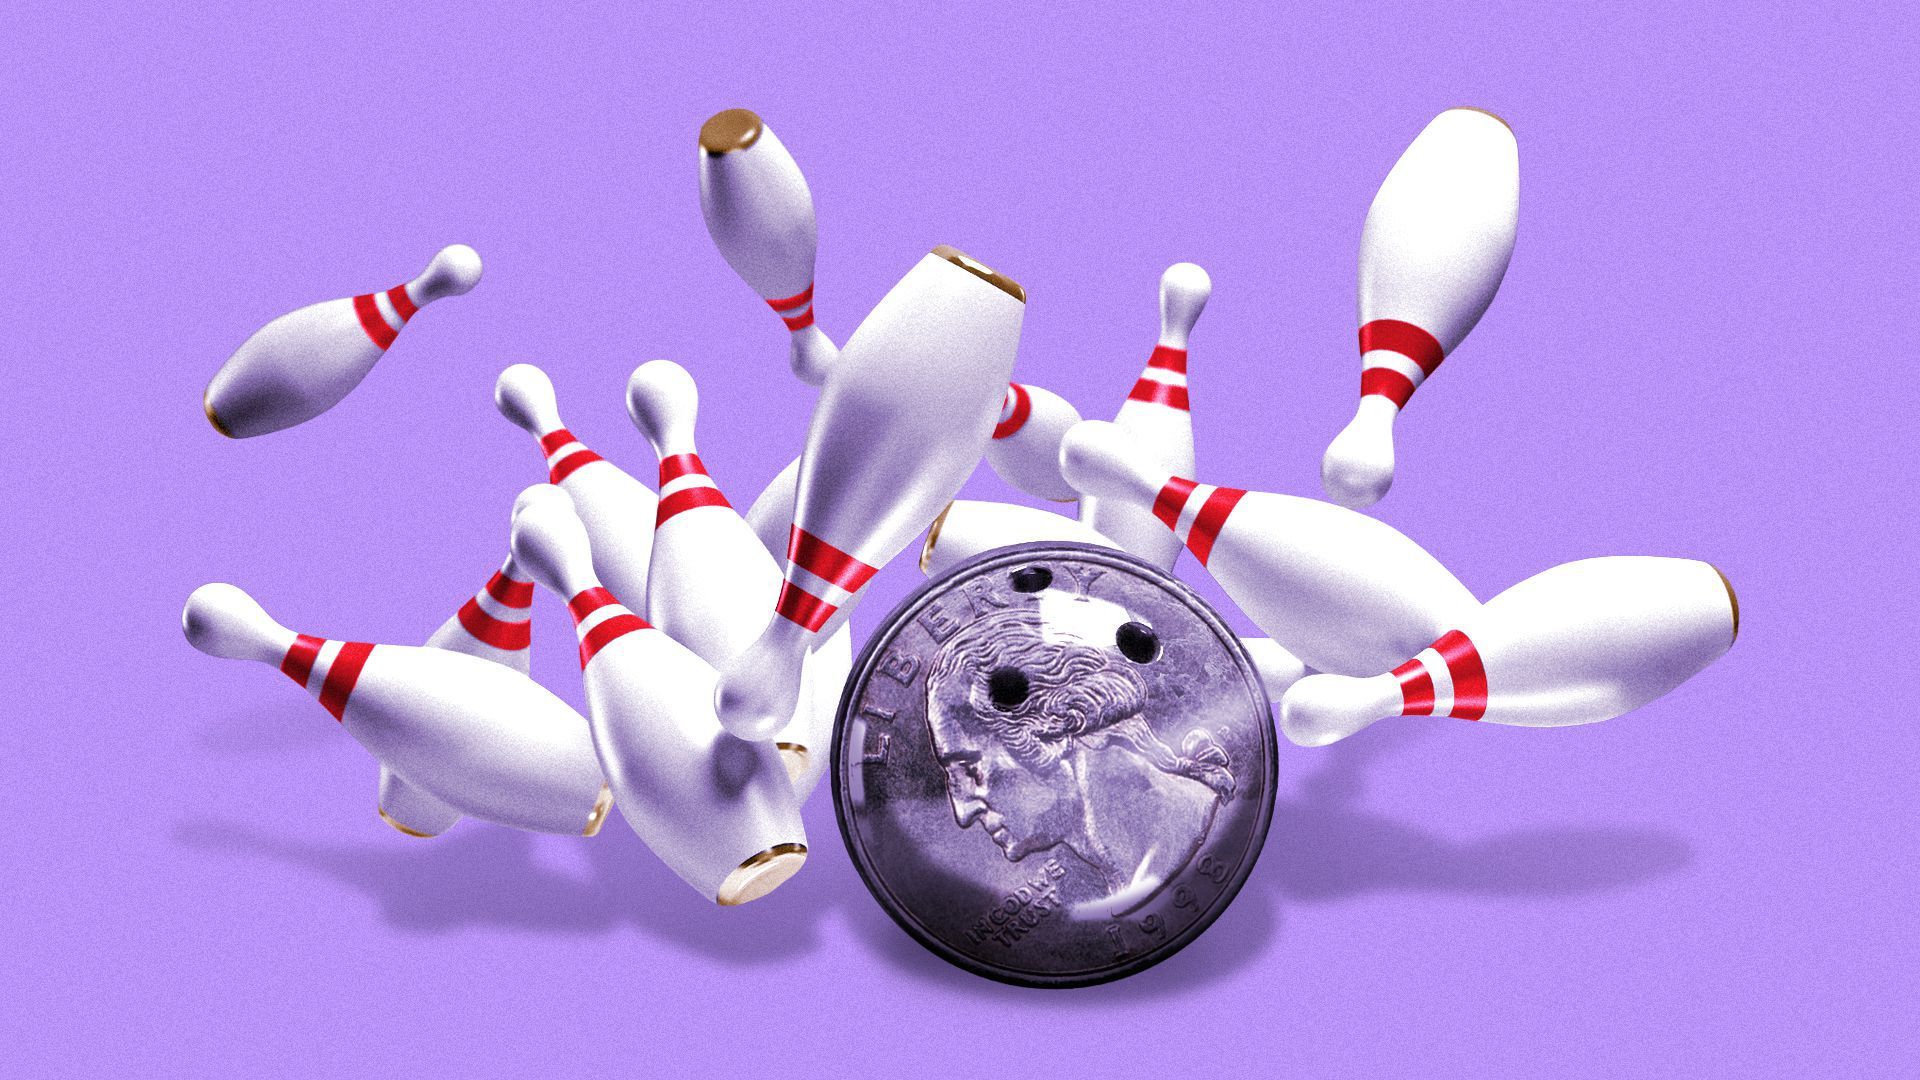 Quarter as a bowling bowl striking pins